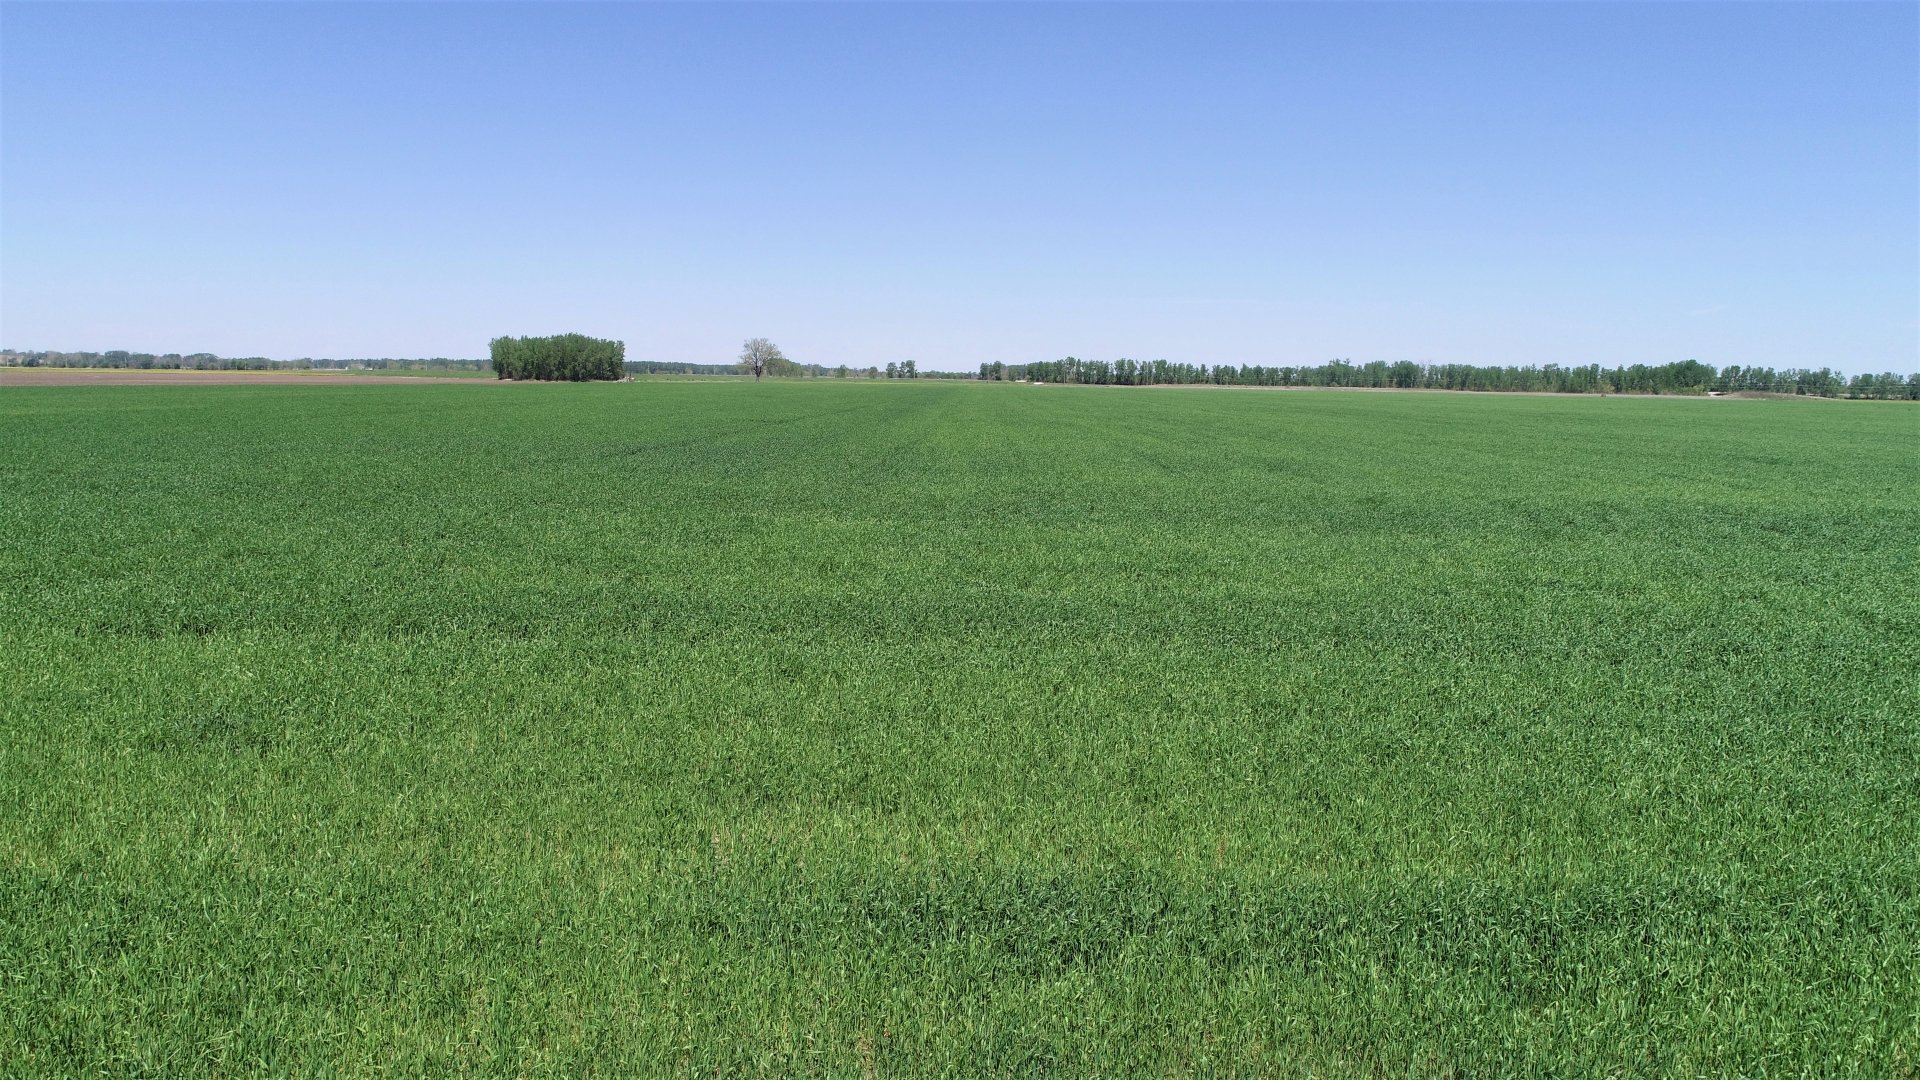 May 2021 - Winter Wheat Crop